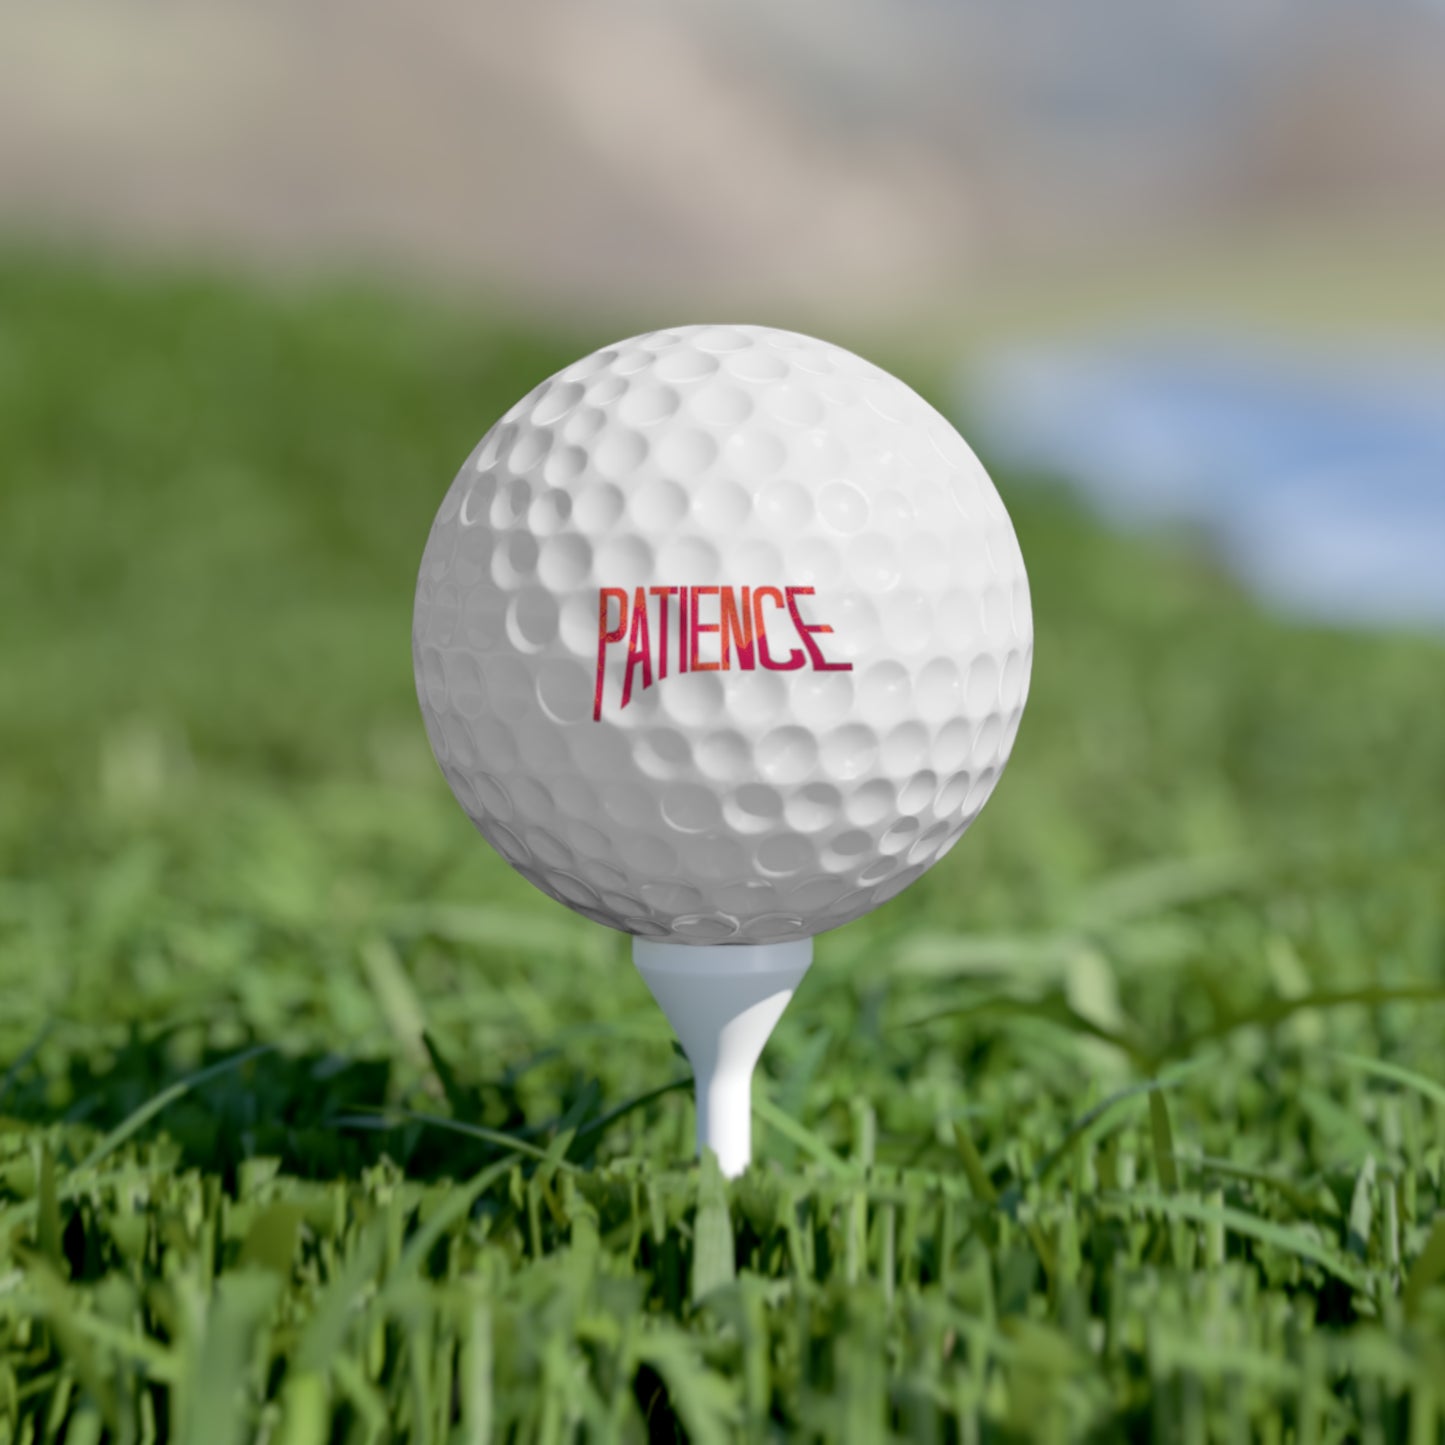 "Patience" Golf Balls